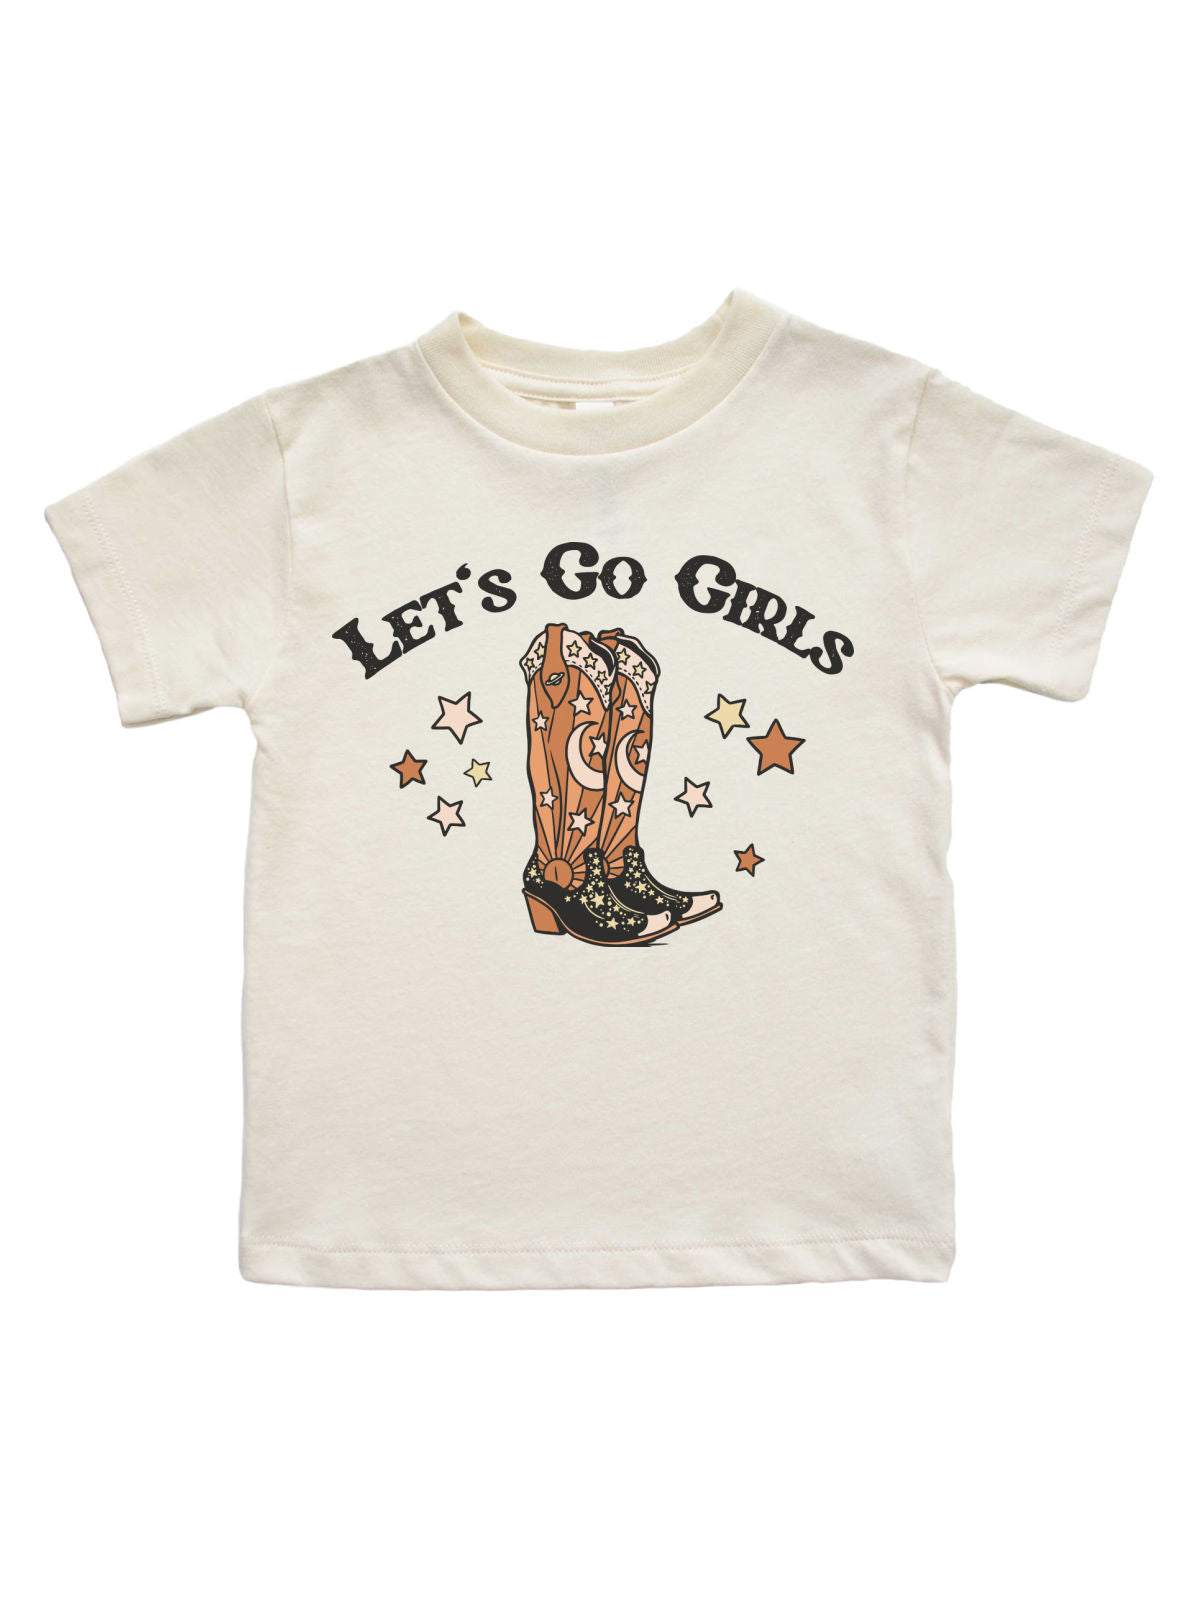 Let's Go Girls Kids Cowboy Boots Shirt